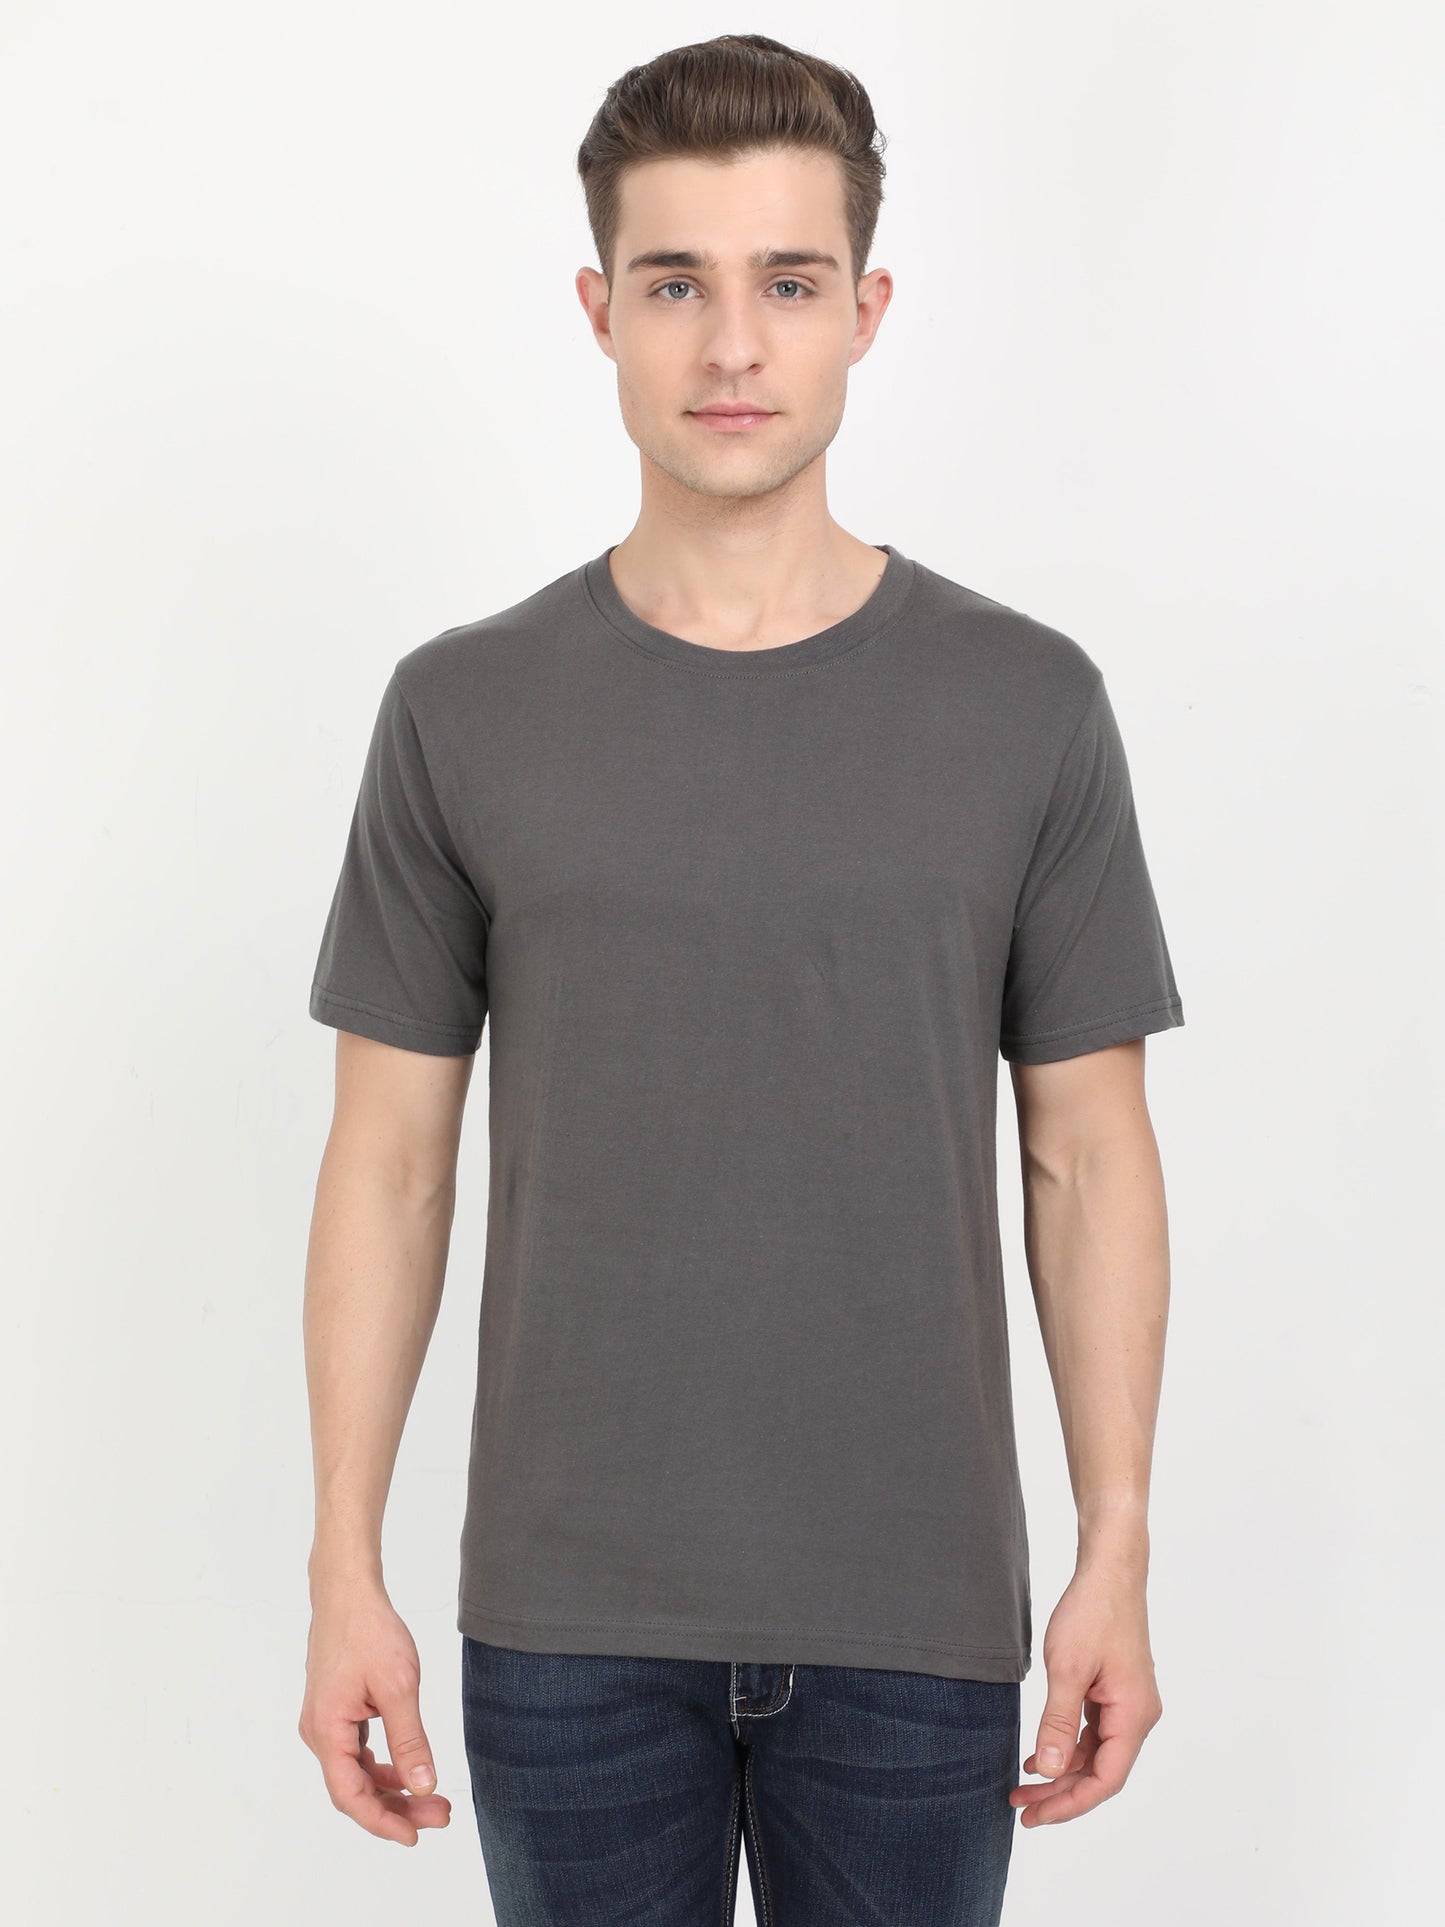 Men's Cotton Plain Round Neck Half Sleeve T-Shirt